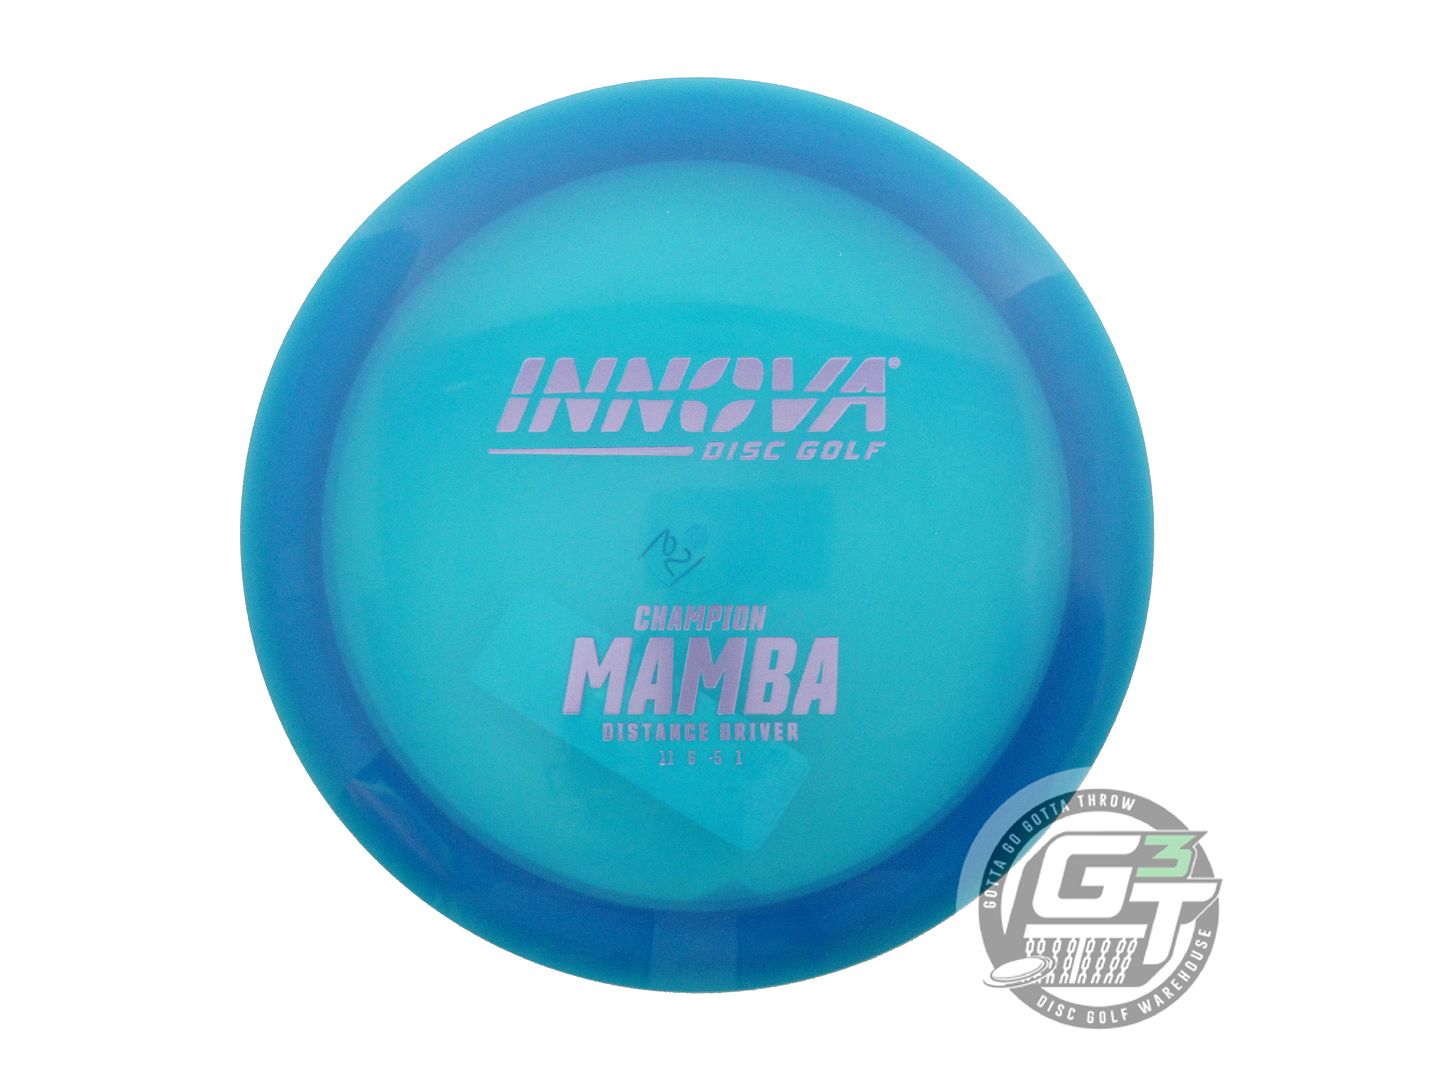 Innova Champion Mamba Distance Driver Golf Disc (Individually Listed)